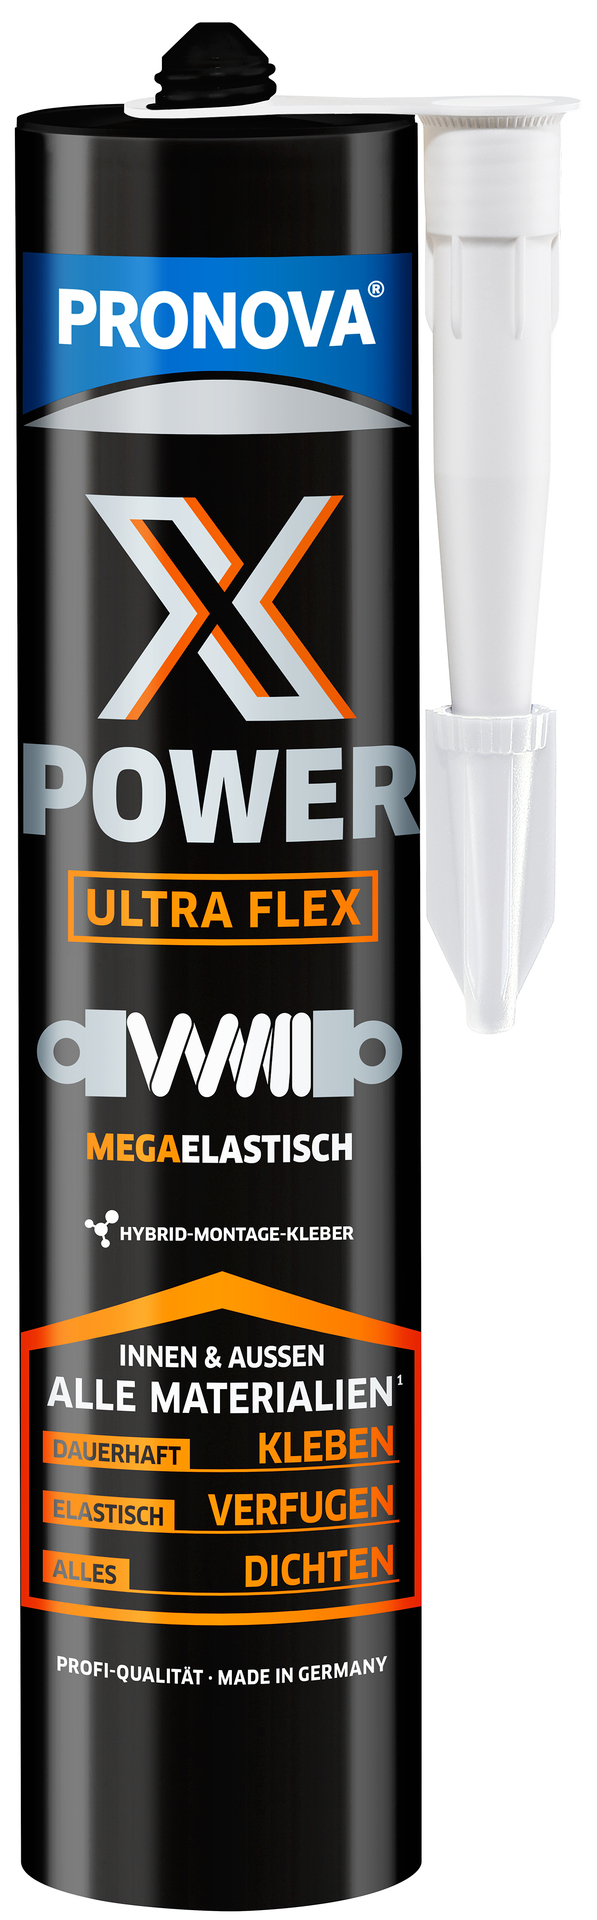 Pronova X Power Ultra Flex